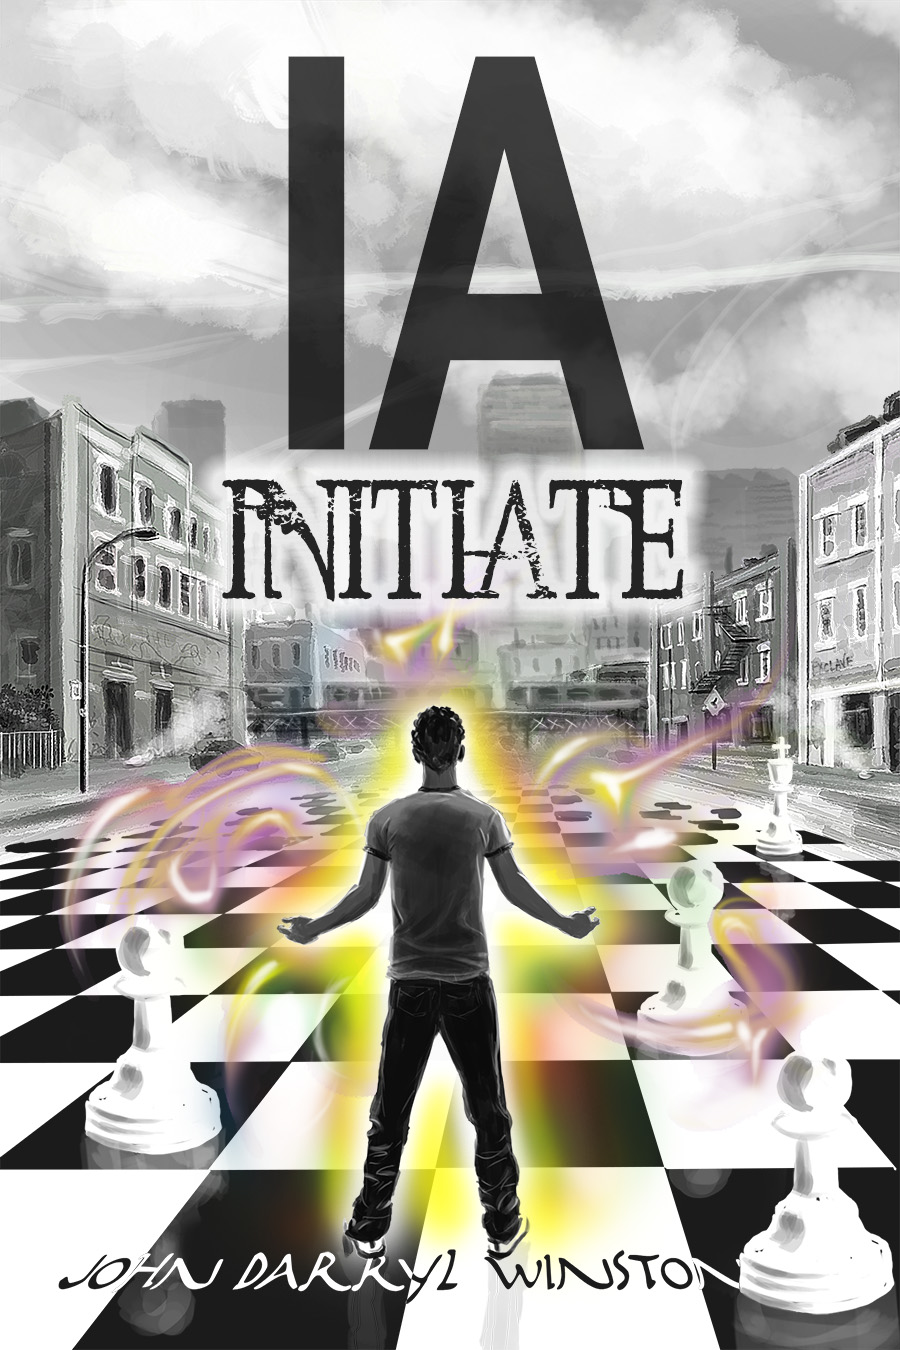 IA: Initiate